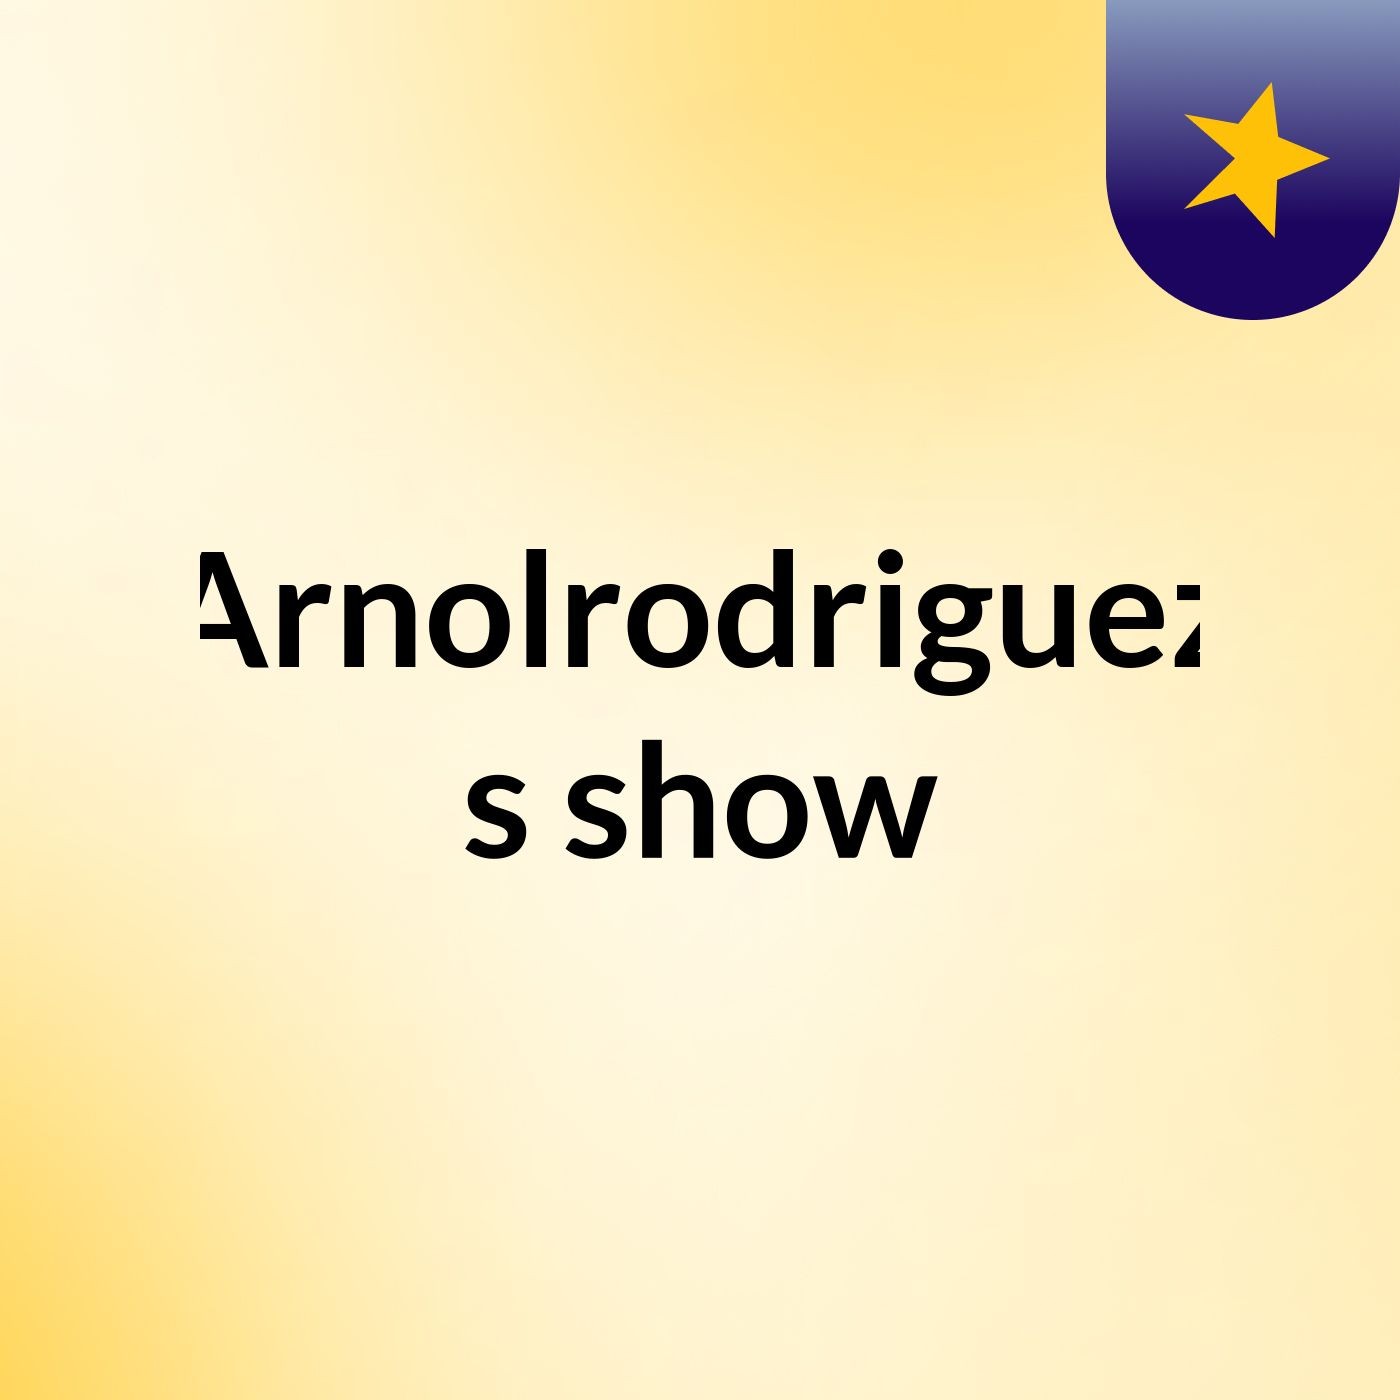 Arnolrodriguez's show